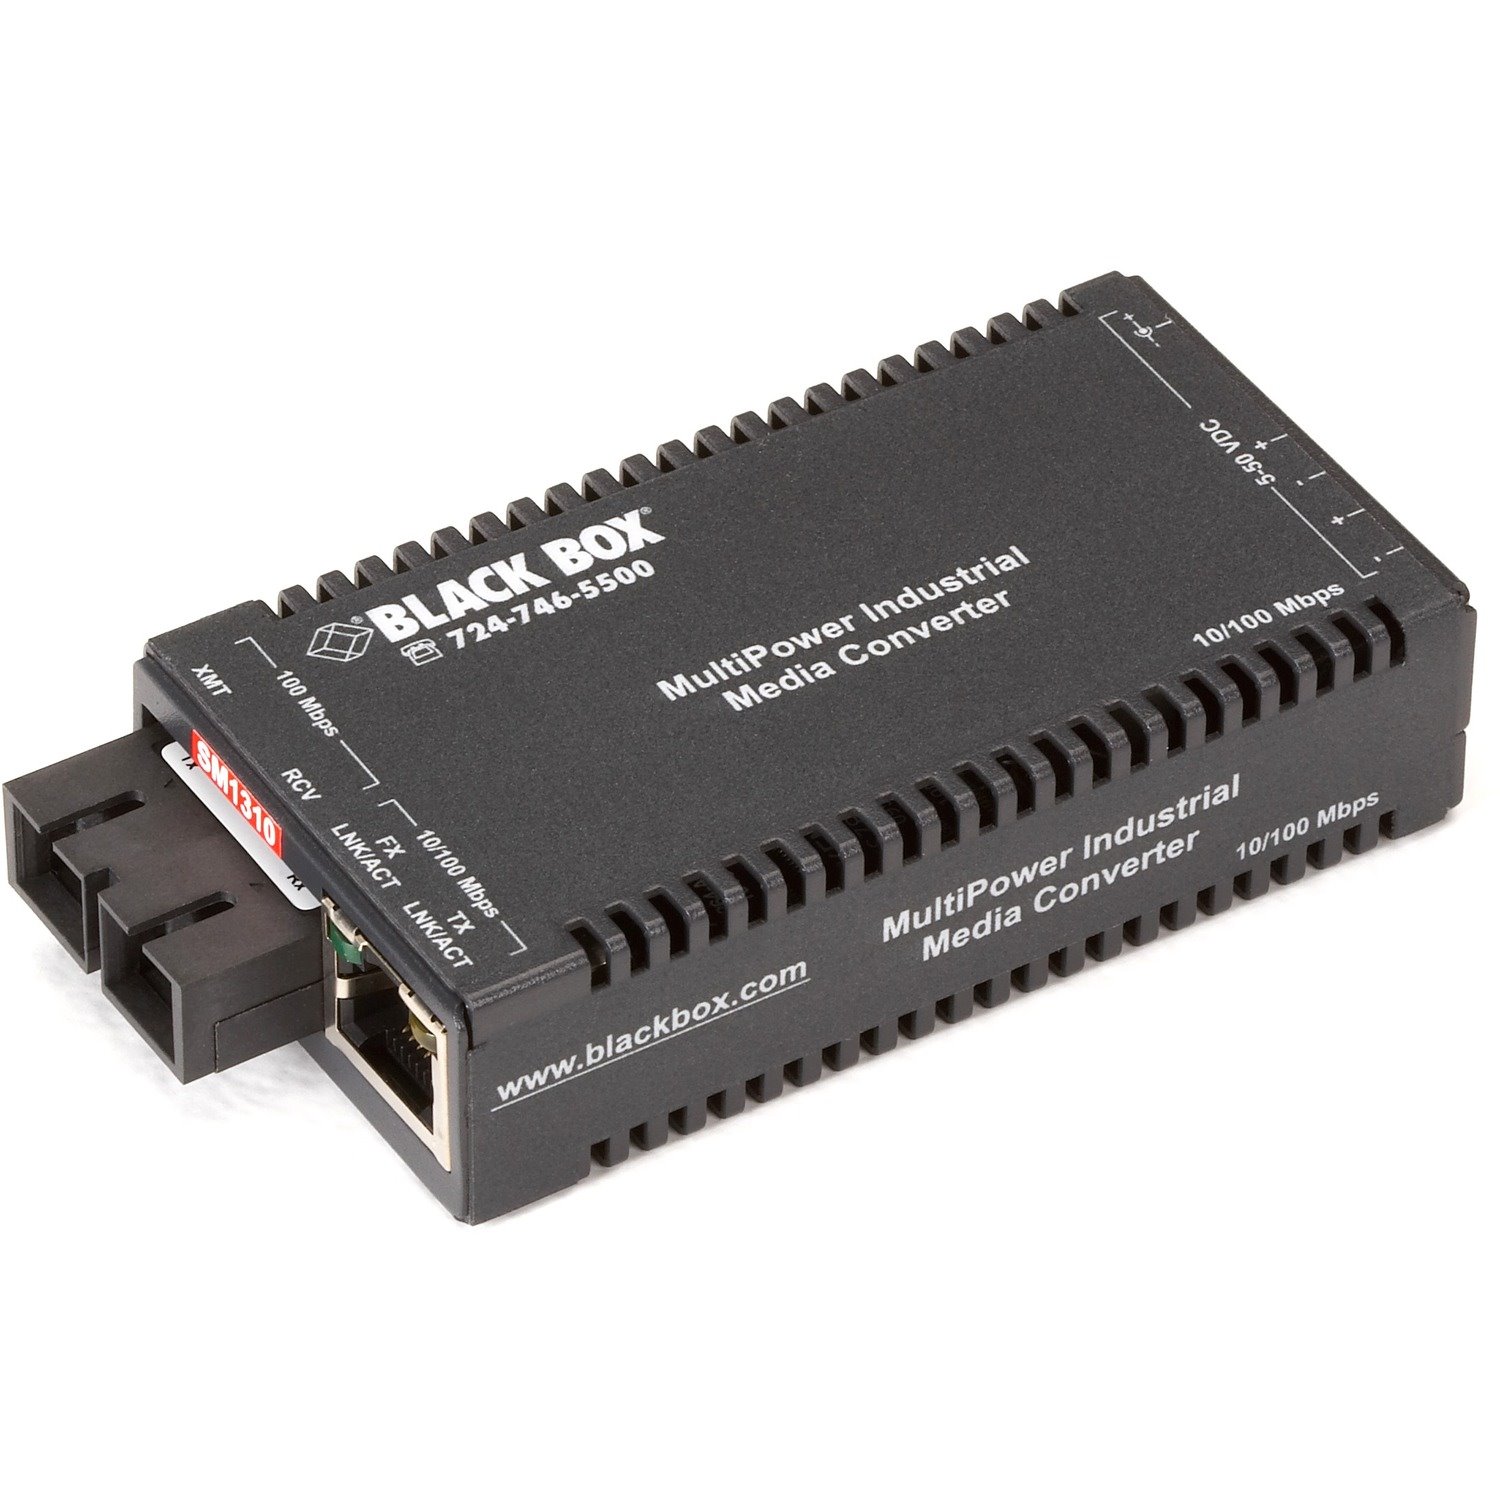 Black Box MultiPower LIC025A-R2 Transceiver/Media Converter